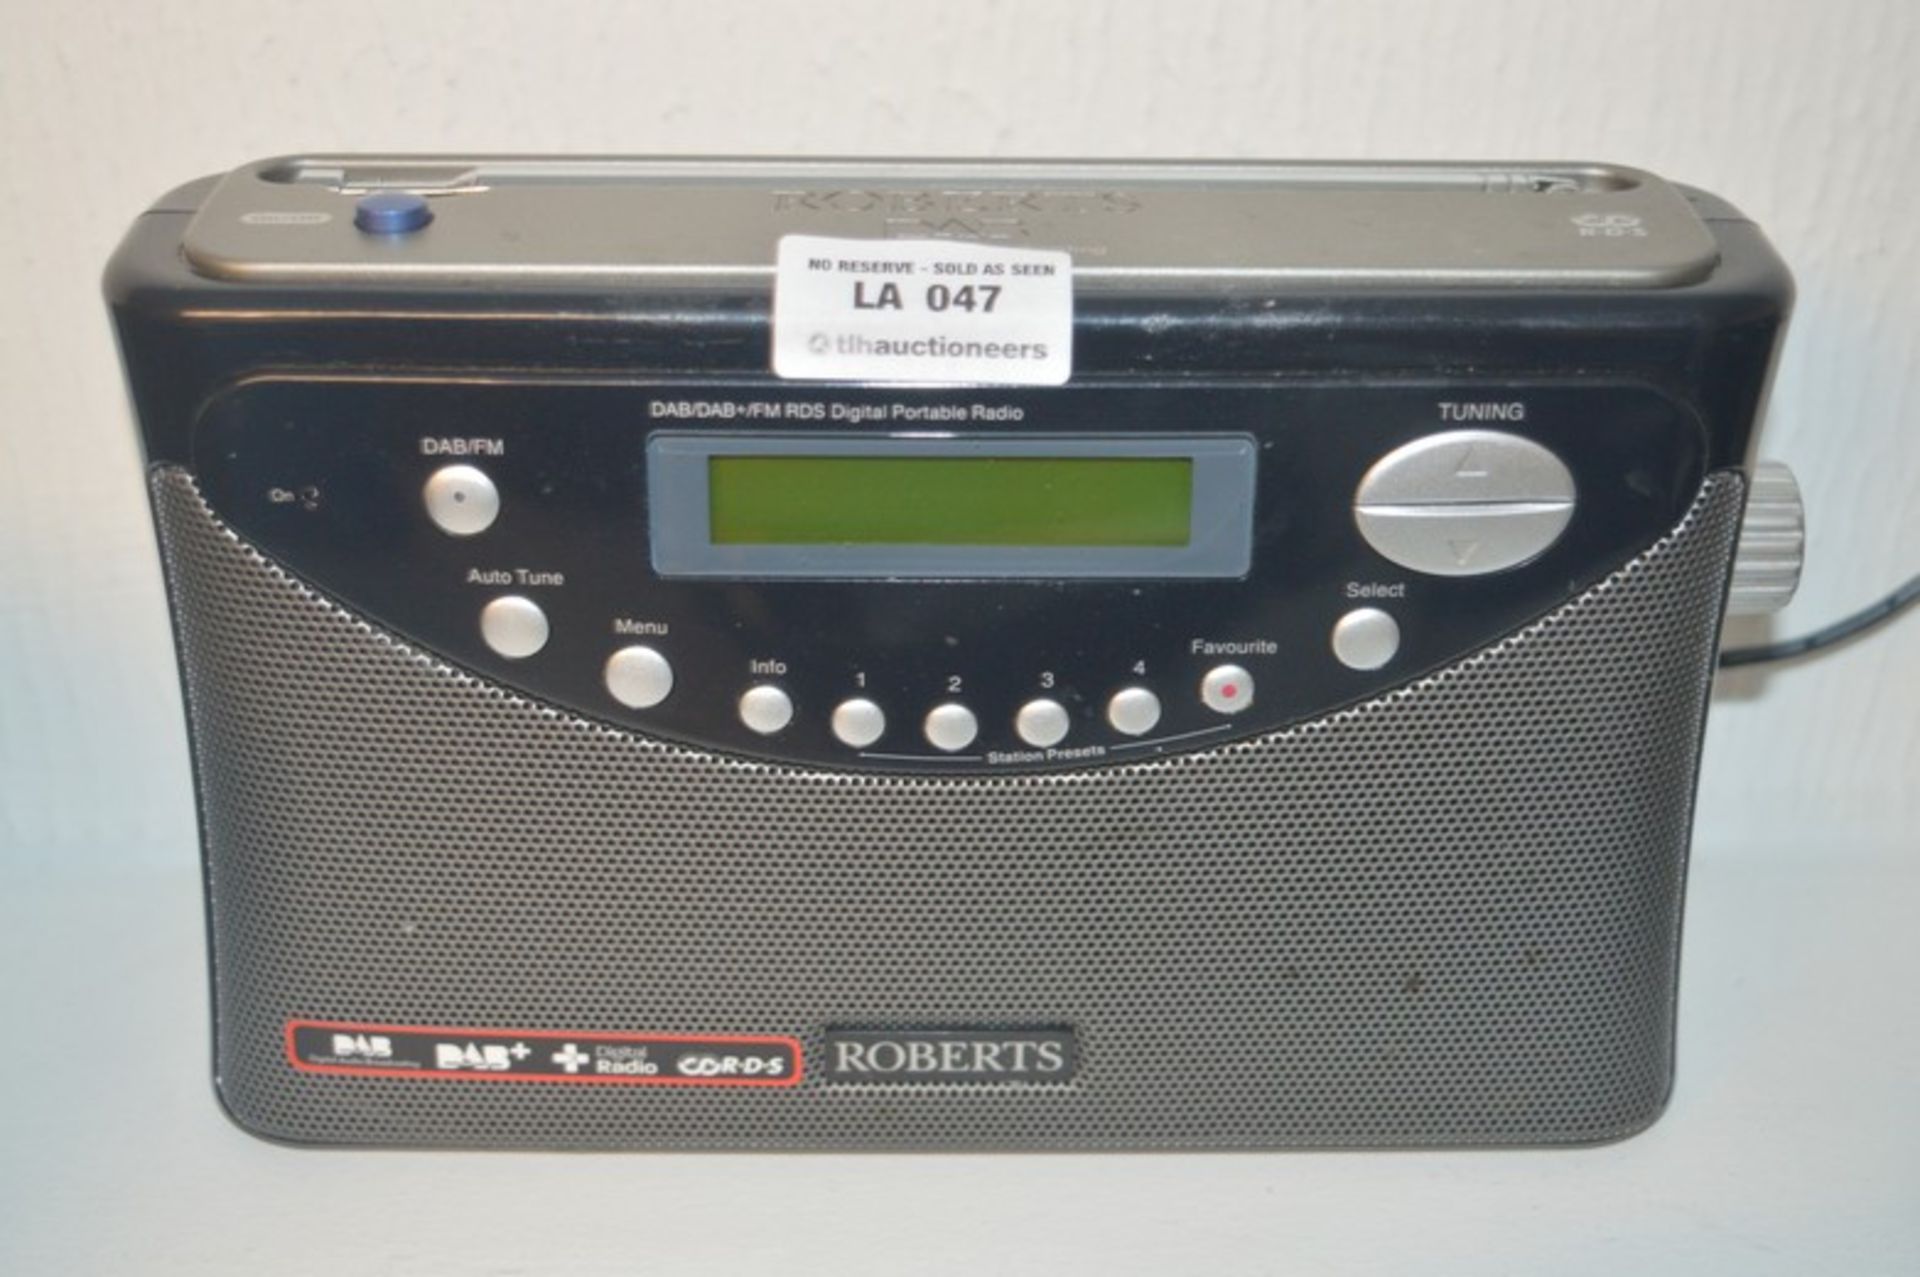 ROBERTS DAB PORTABLE DIGITAL RADIO RRP £120.00 11/08/15